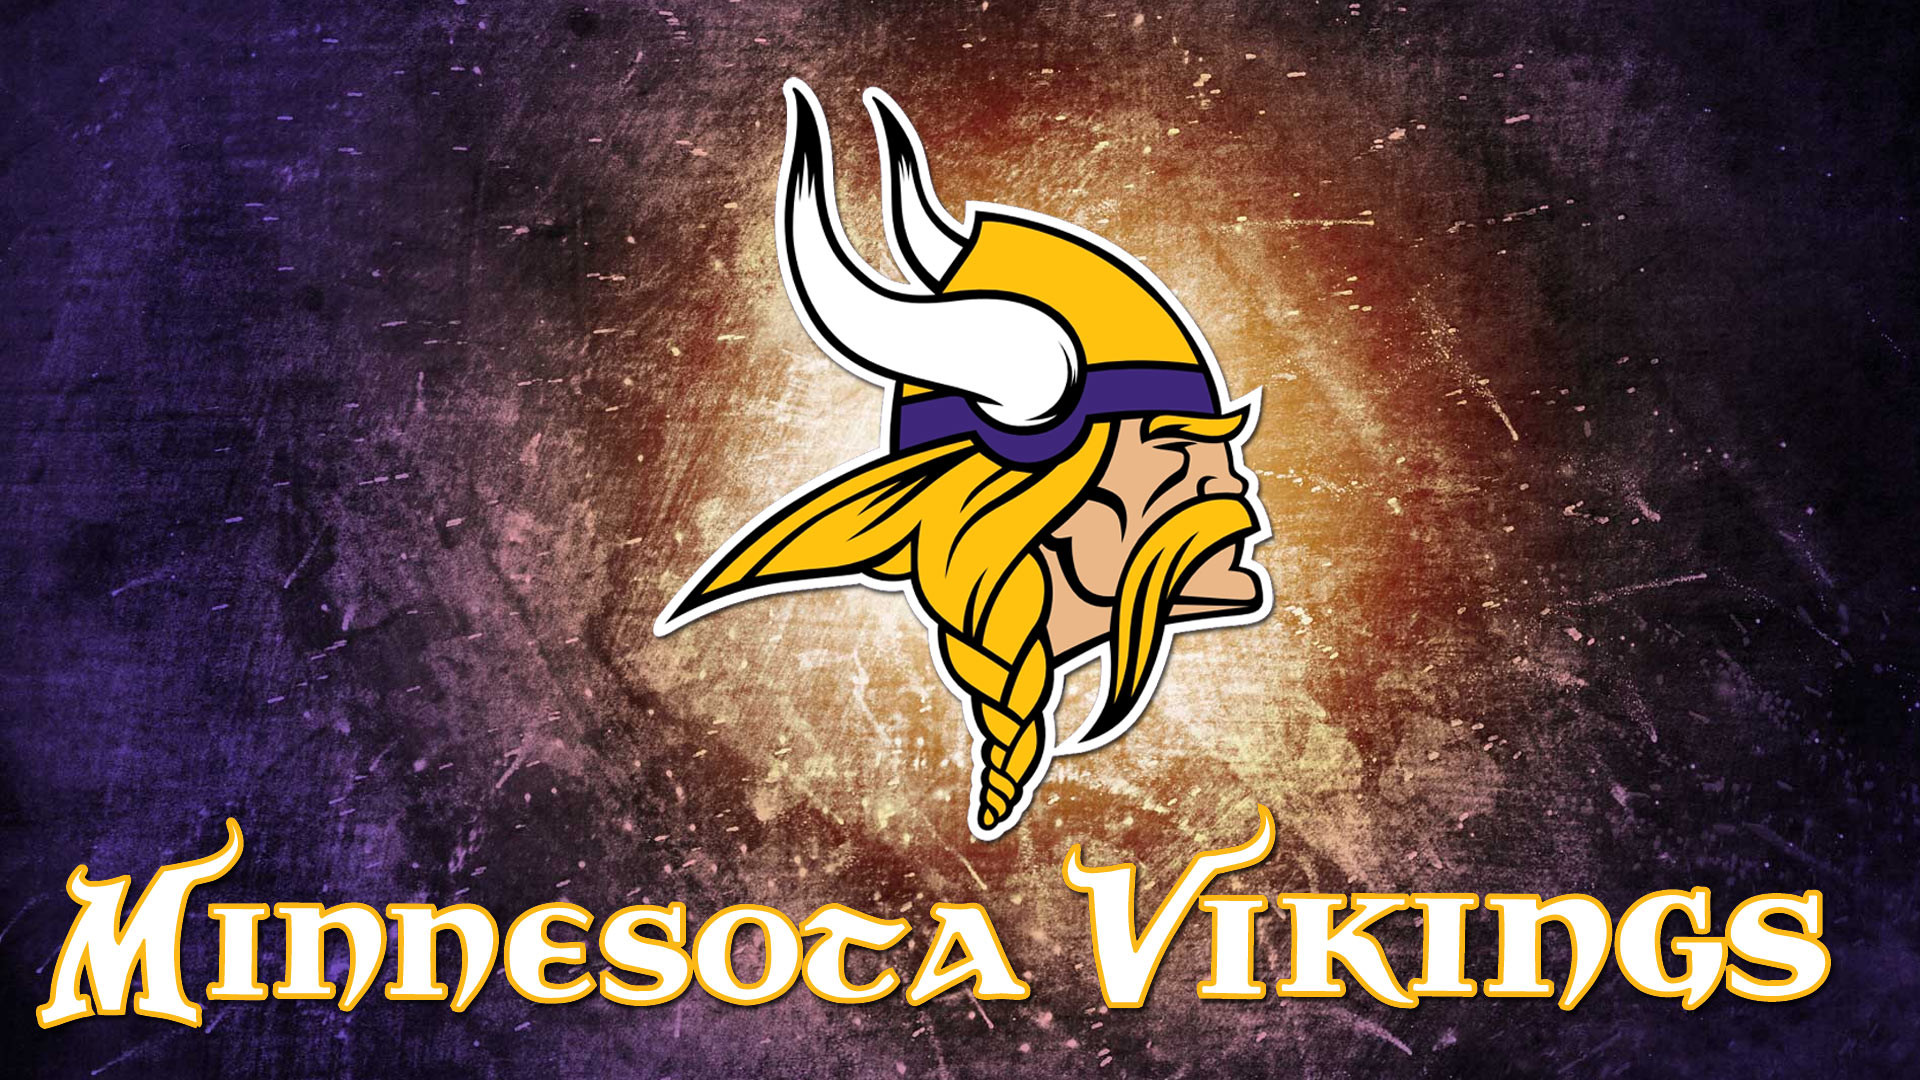 1920x1080 Minnesota Vikings logo Hd 1080p high quality Wallpaper screen size 